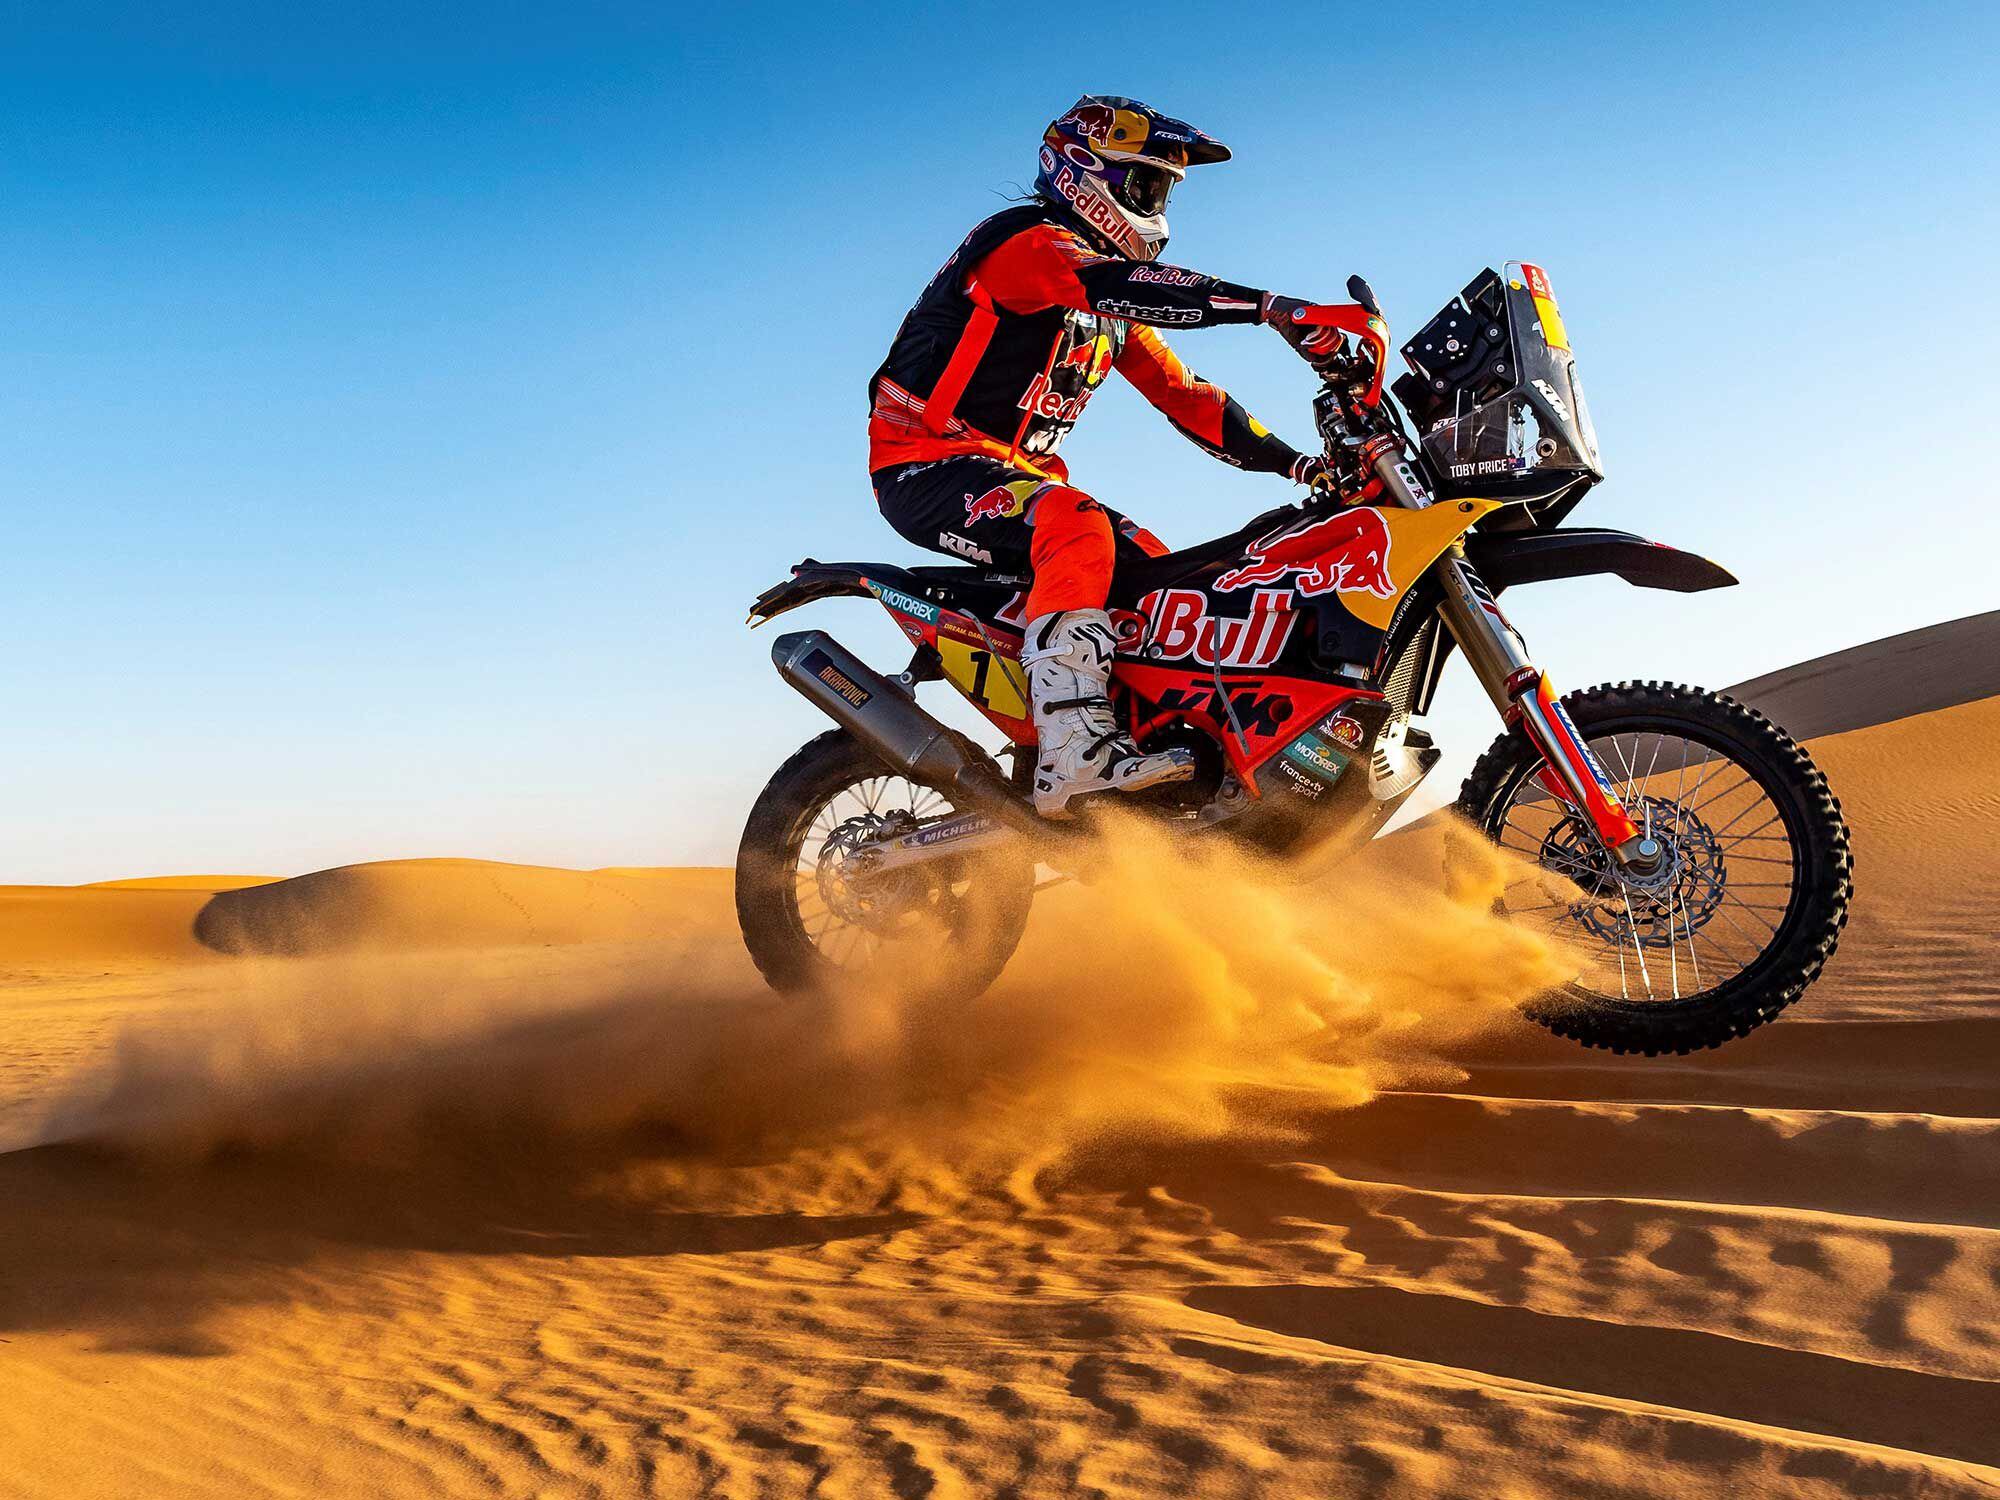 Toby Price on last year’s bike in the 2020 Dakar Rally.